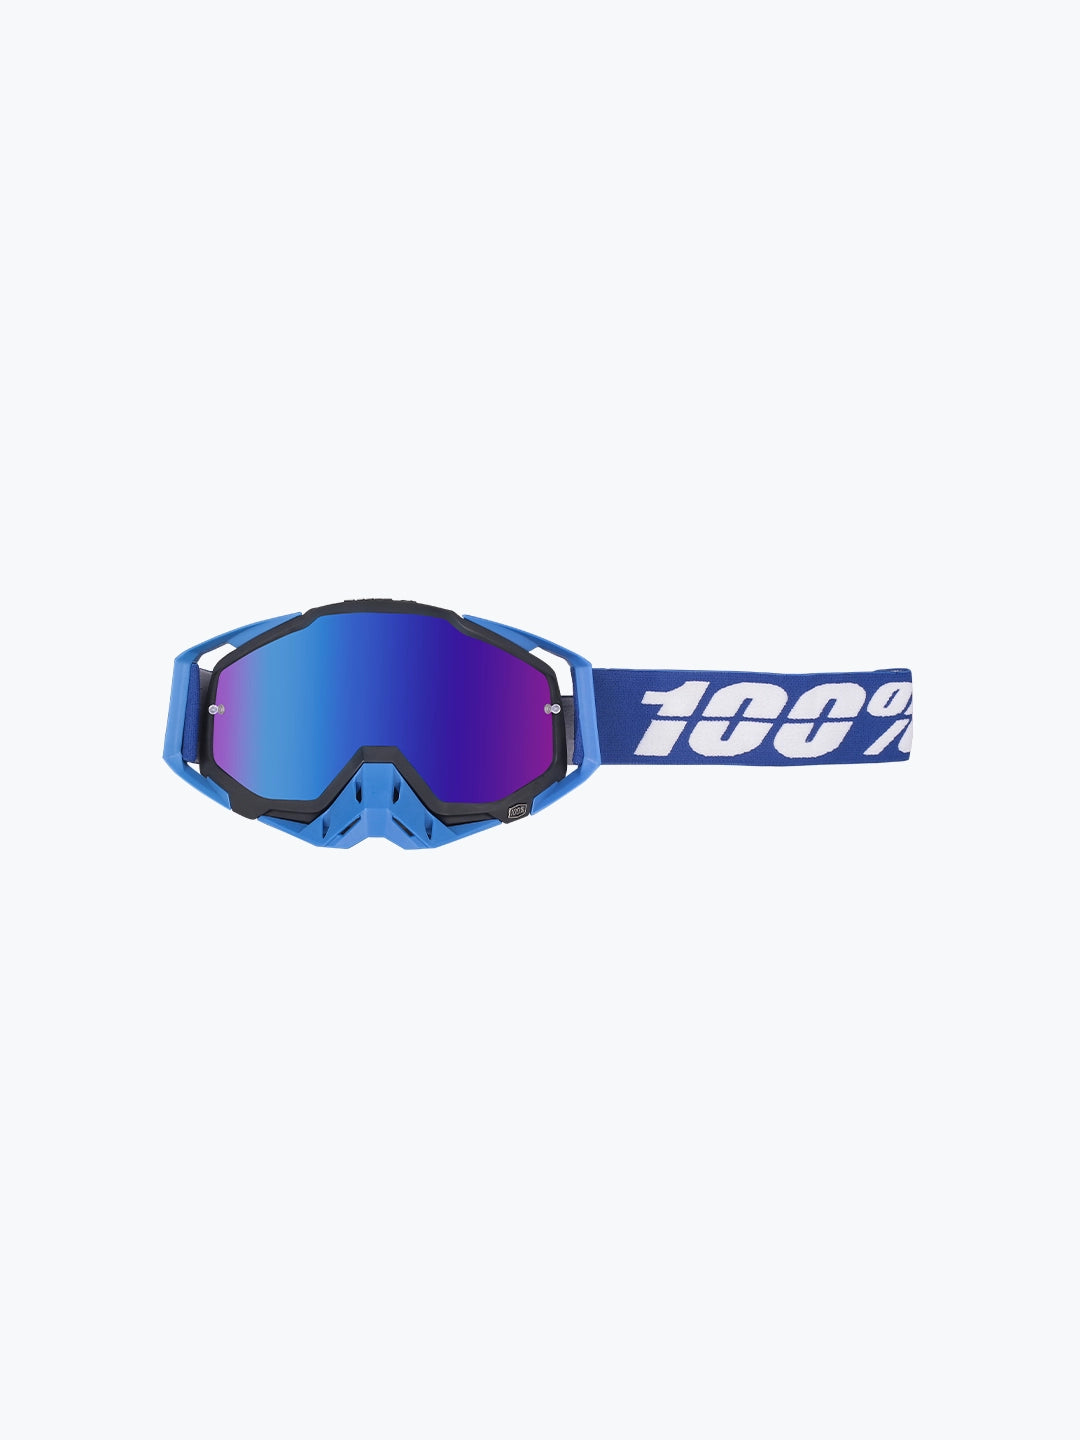 Goggles 100% - 146 Blue Tint